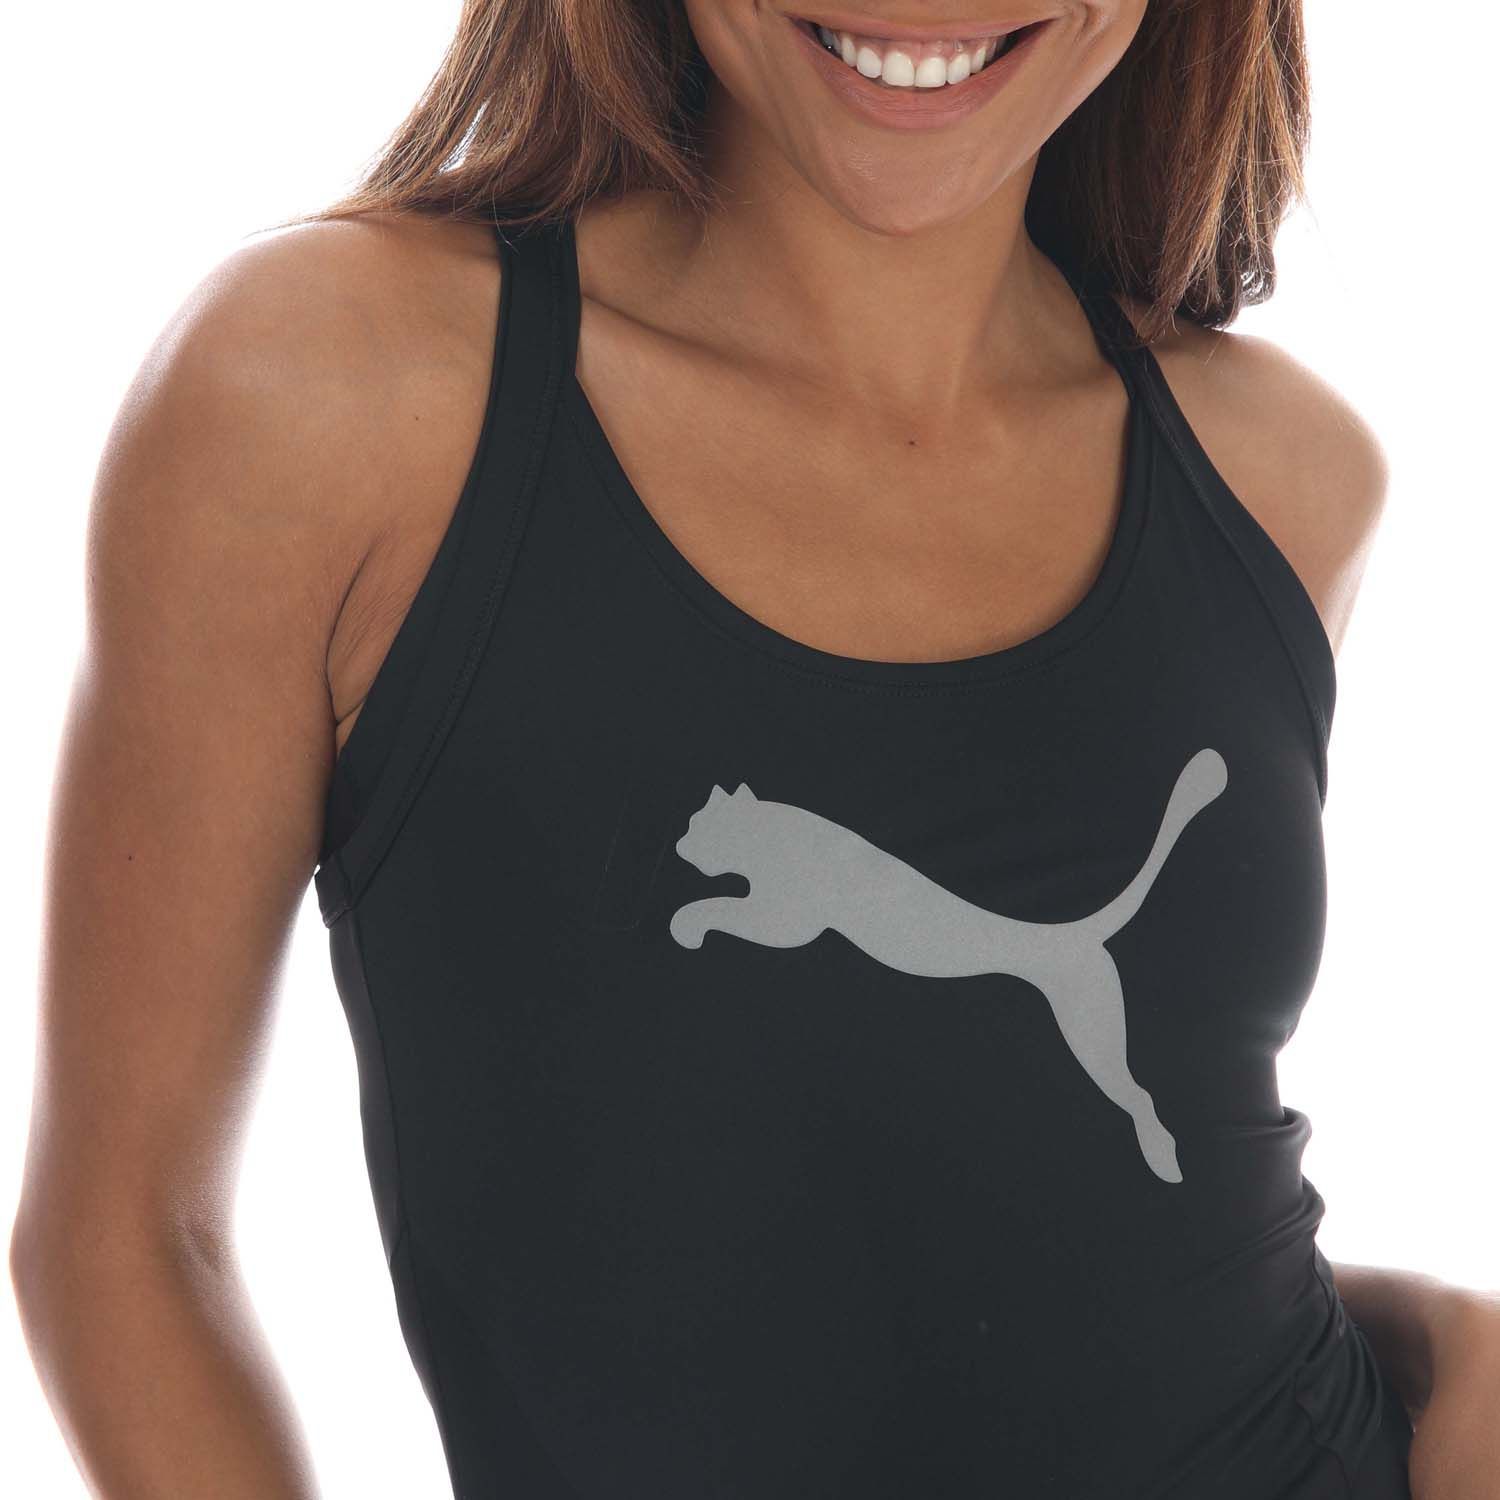 Womens Puma Training Tank in black.- Round neckline.- Sleeveless.- Ultra-soft  lightweight fabric.- PUMA graphic logo.- Shell: 92% Polyester  8% Elastane.- Ref: 51805104